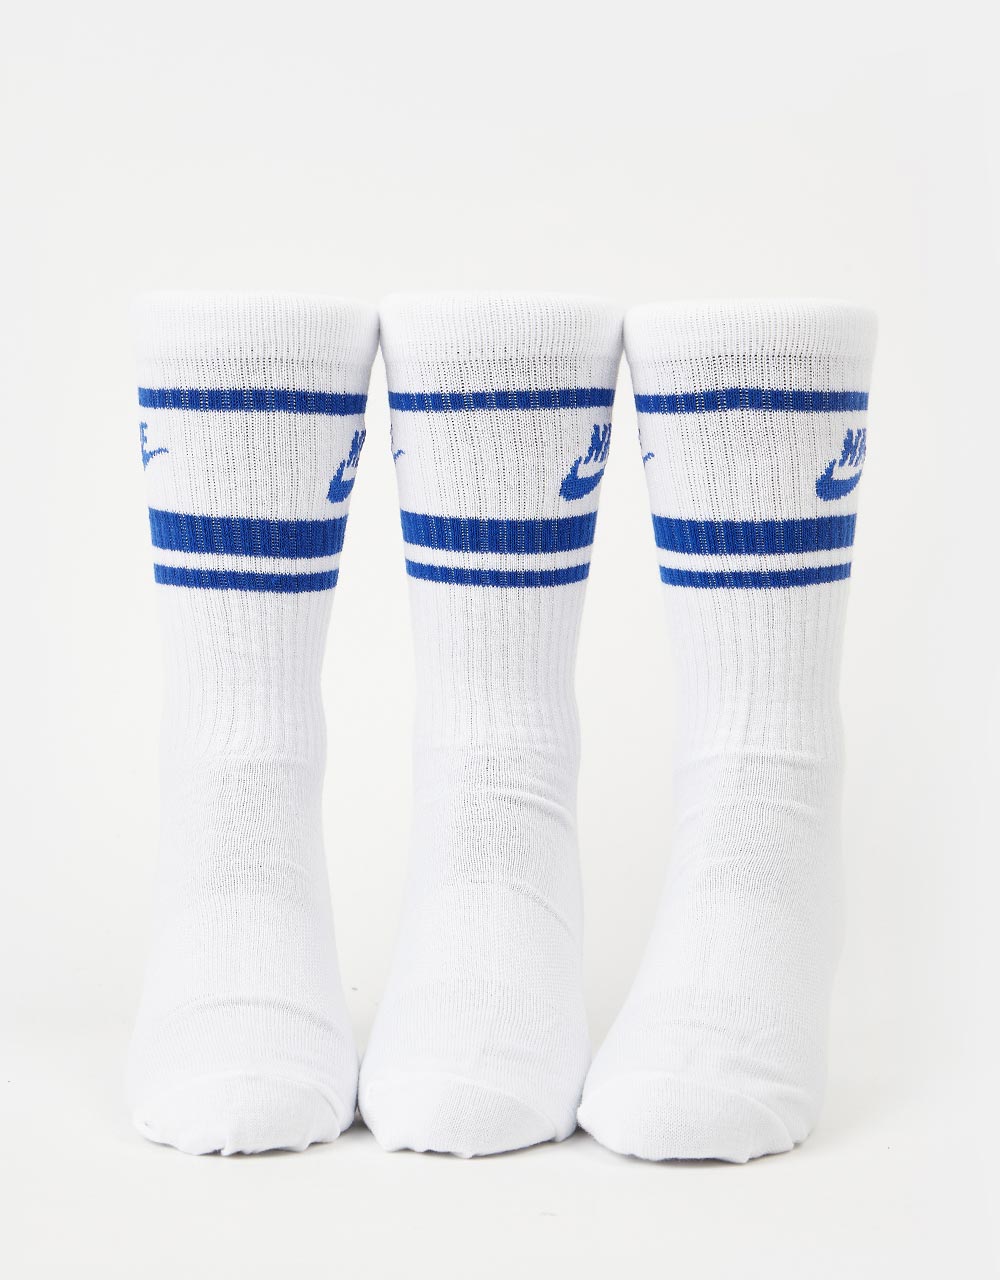 Nike Sportswear Everyday Essential 3 Pack Socks - White/Game Royal/Game Royal